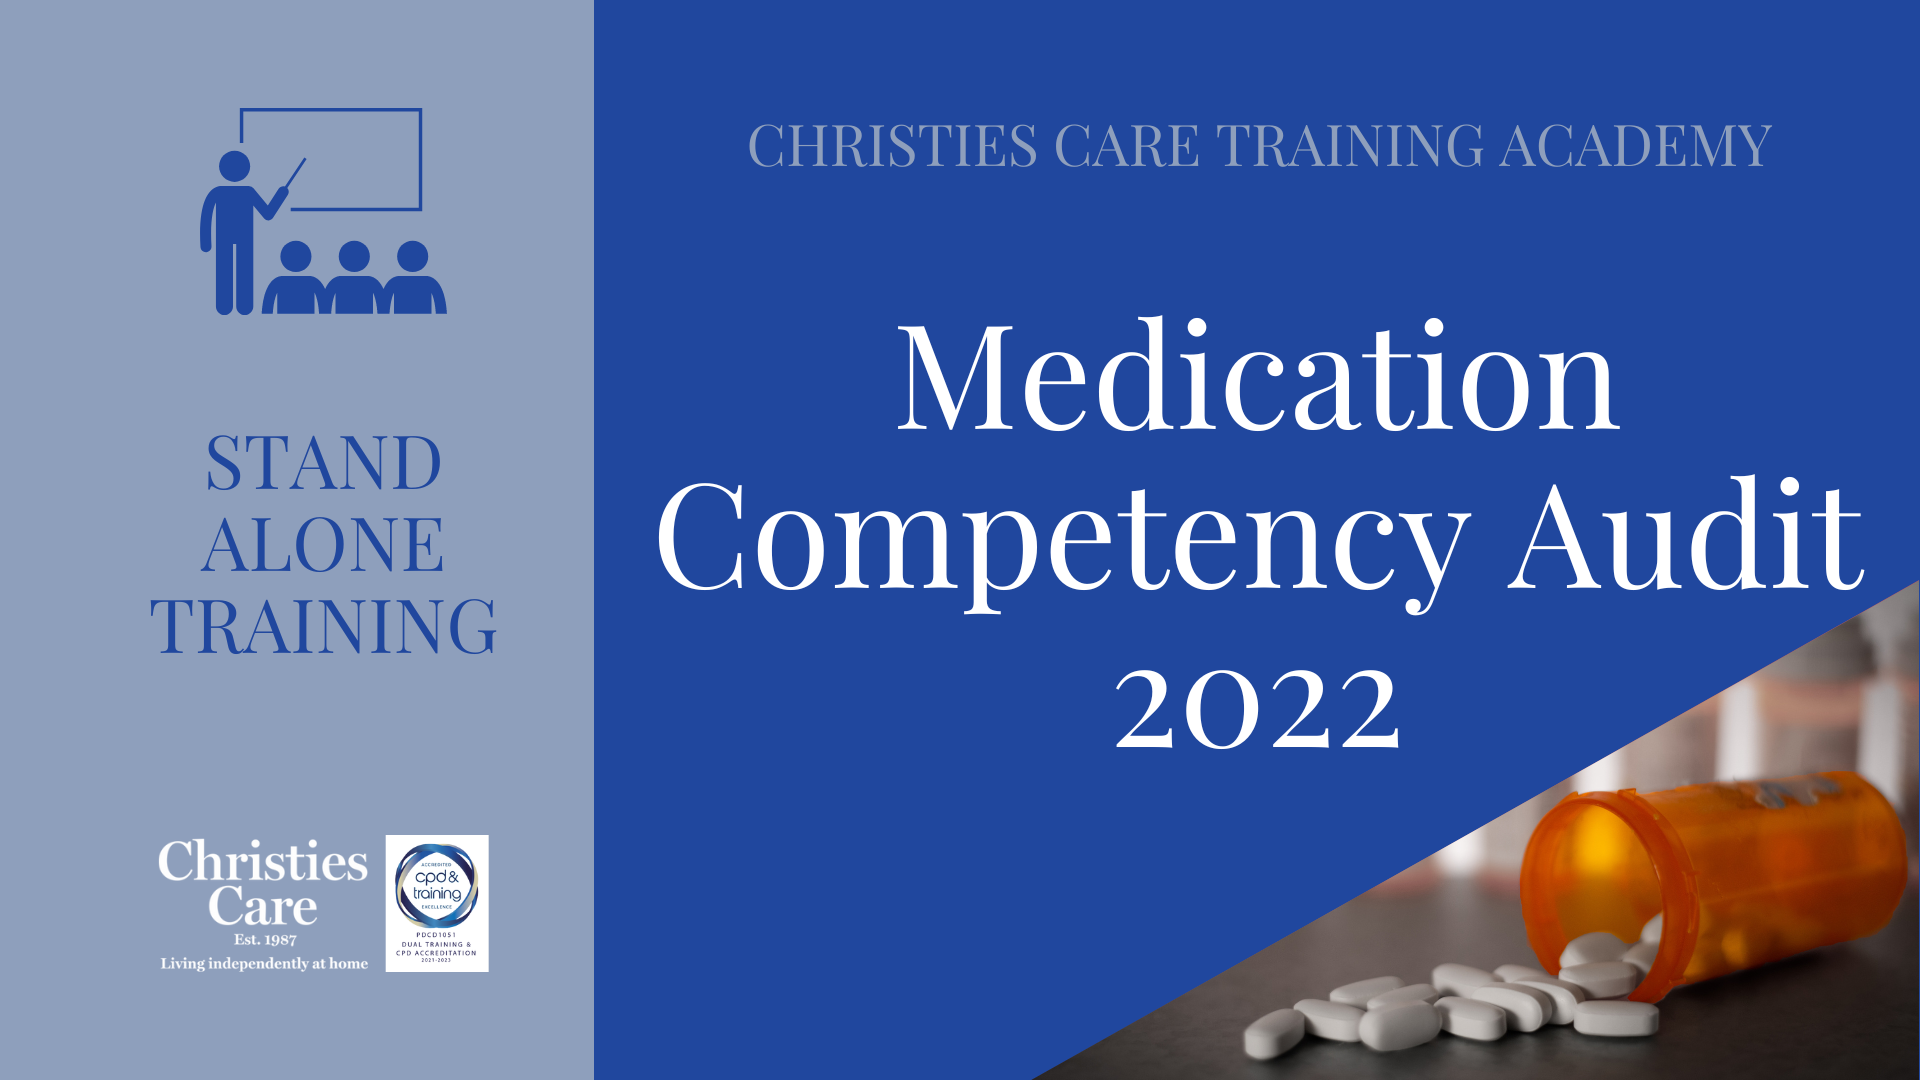 MEDICATION COMPETENCY AUDIT 2022 TR008